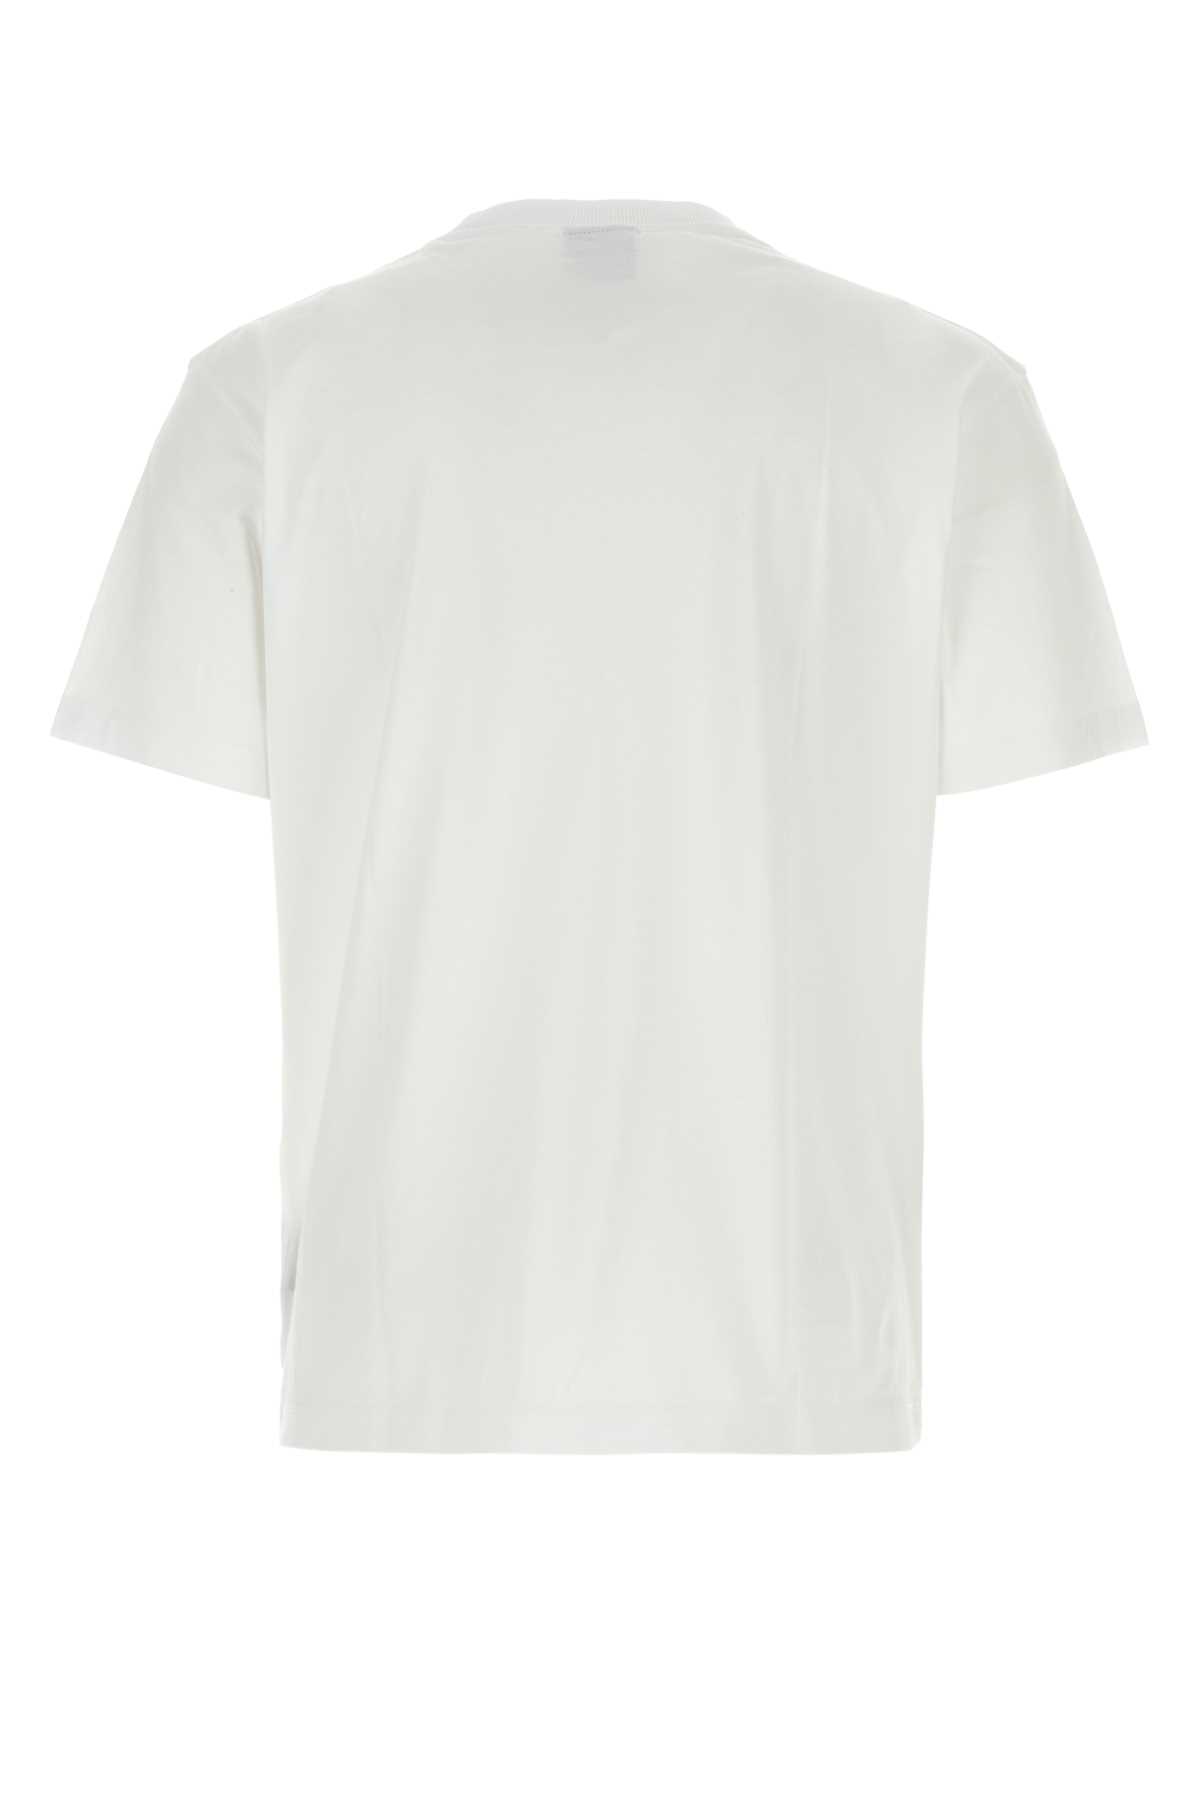 Marcelo Burlon County Of Milan White Cotton Cross T-shirt